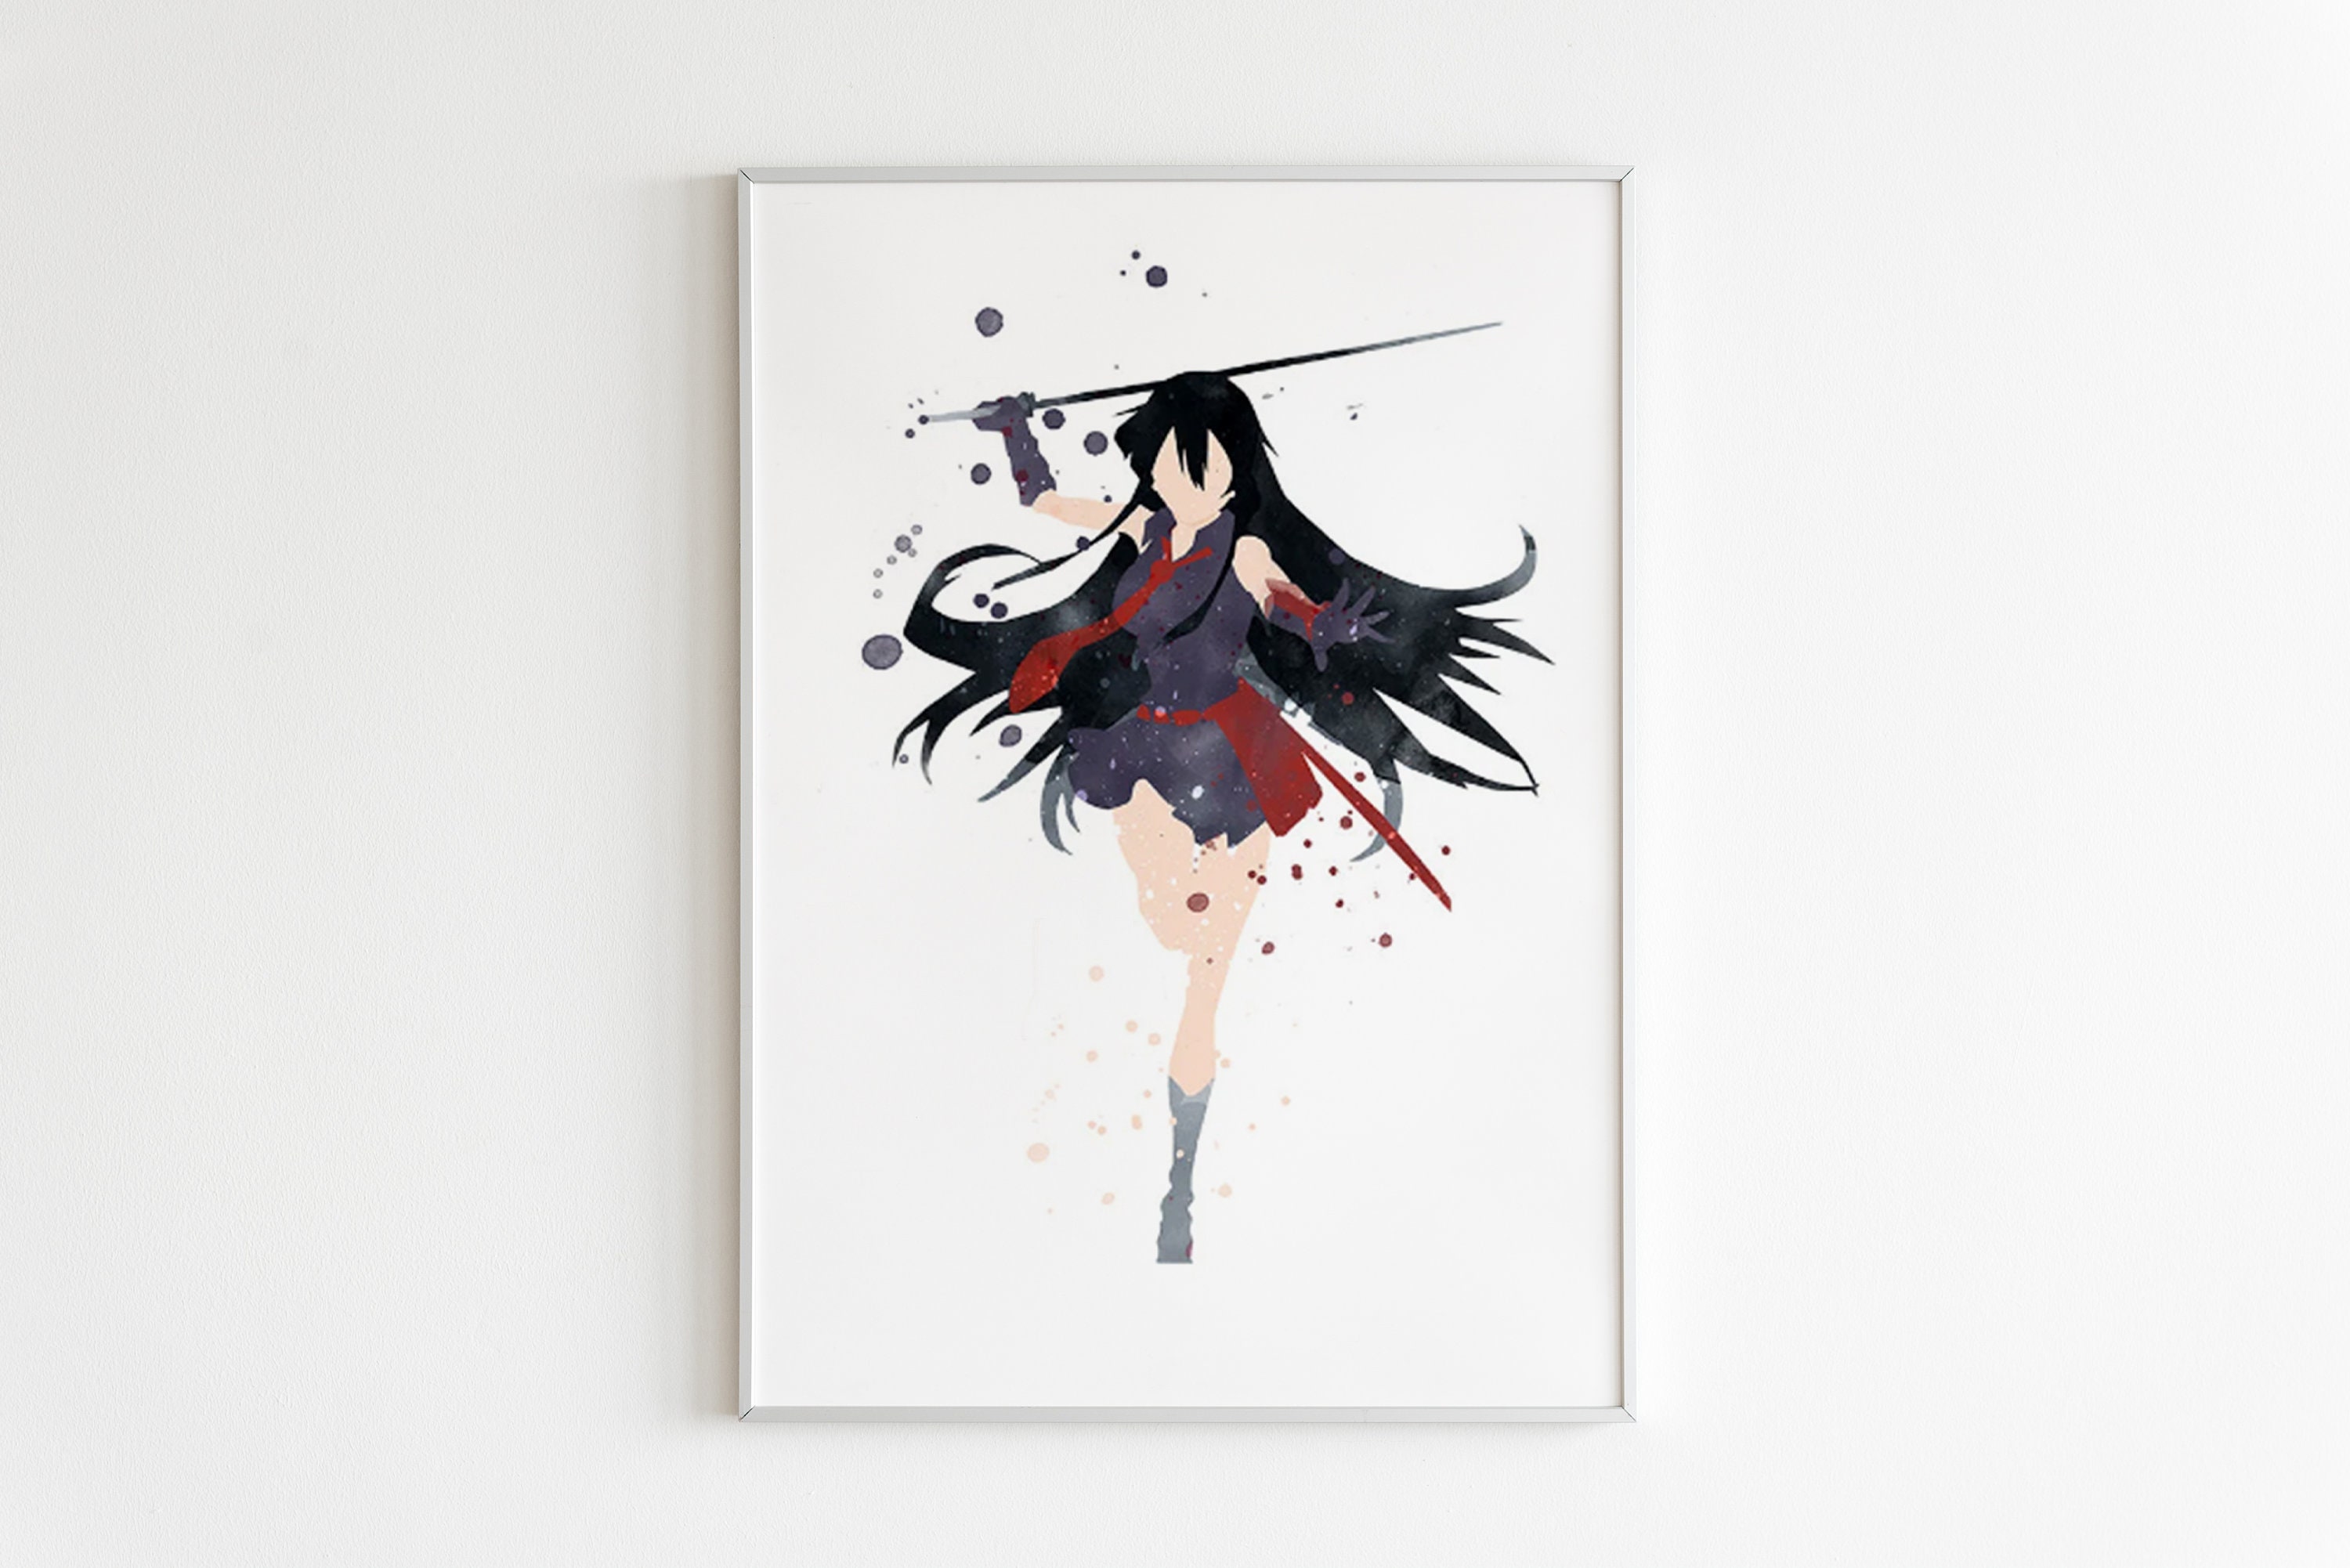 Leone Akame Ga Kill' Poster, picture, metal print, paint by Illust Artz